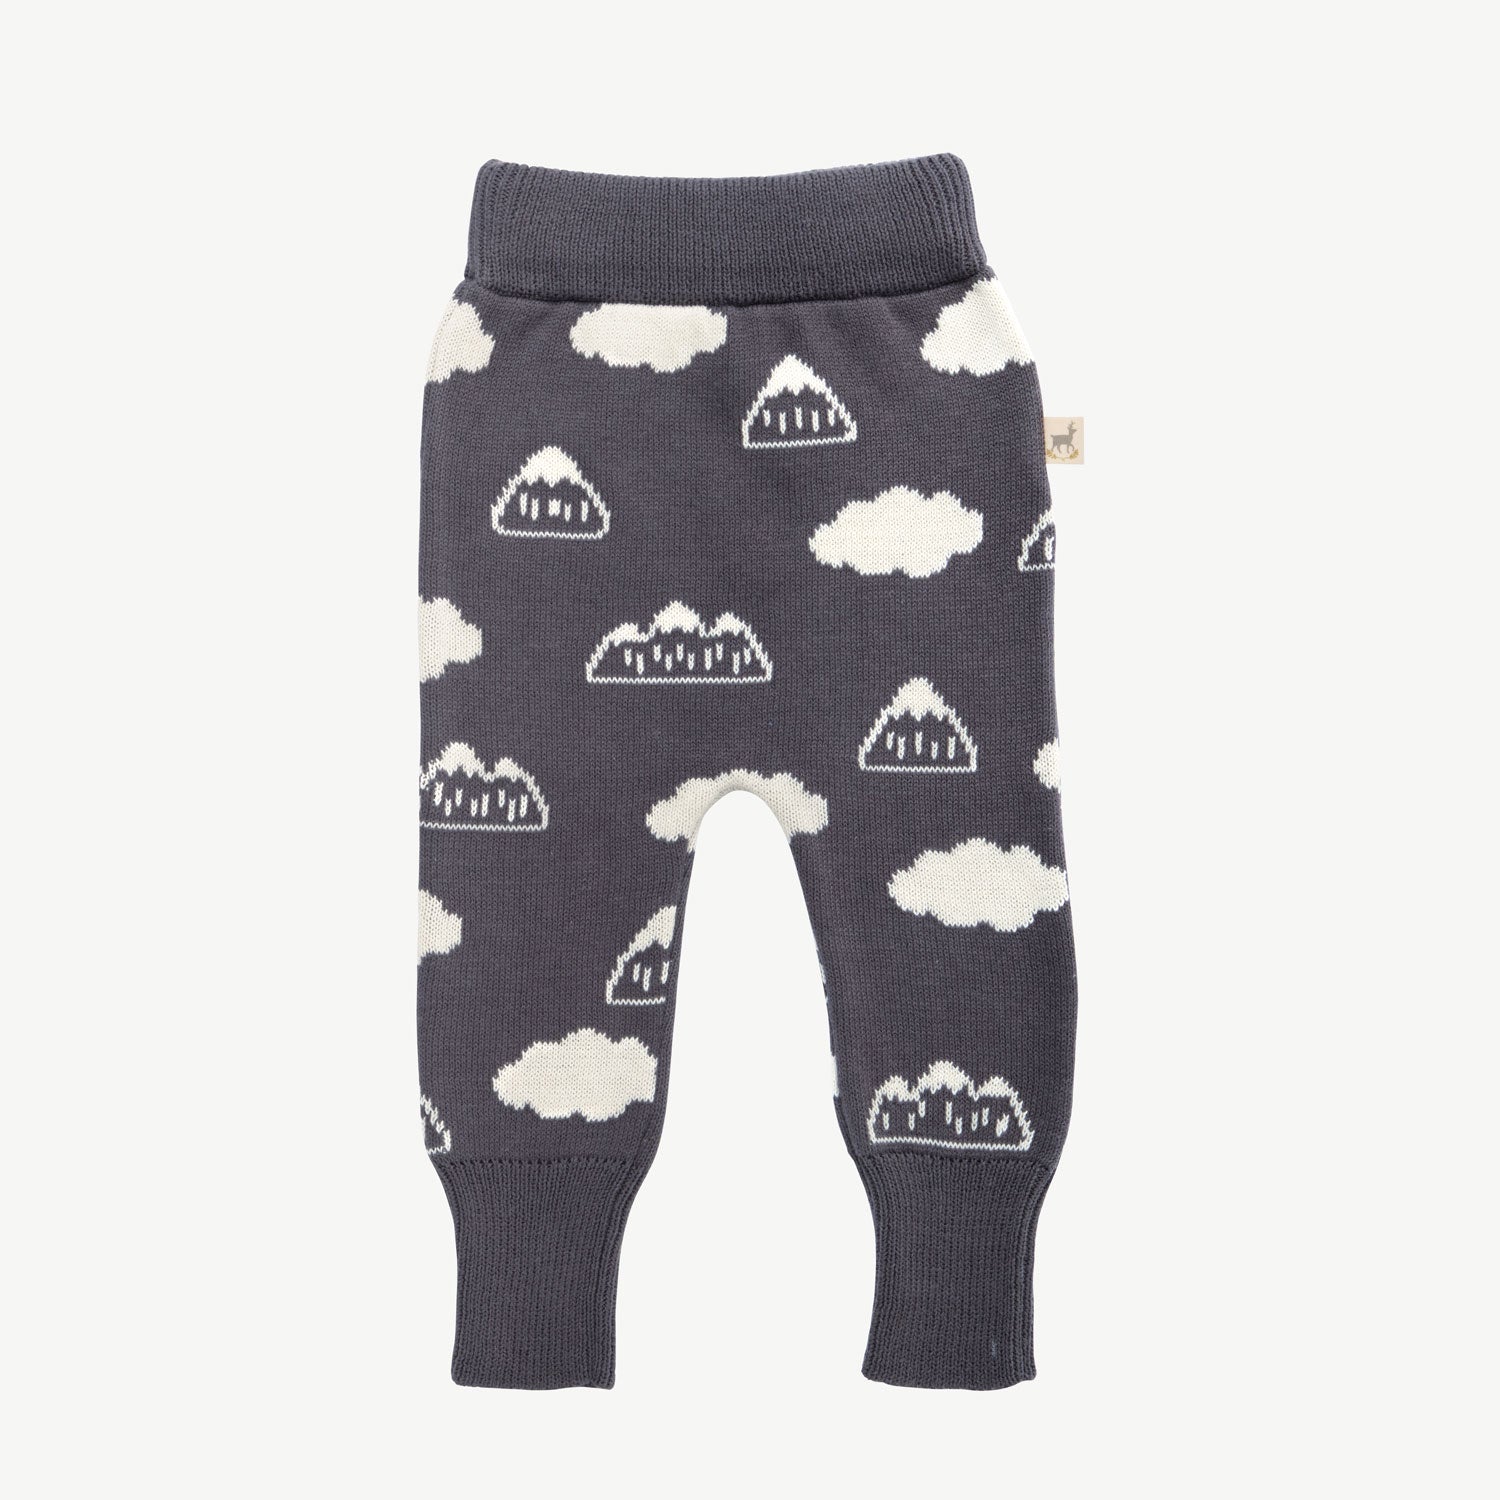 'mountain's view' charcoal gray knit pants